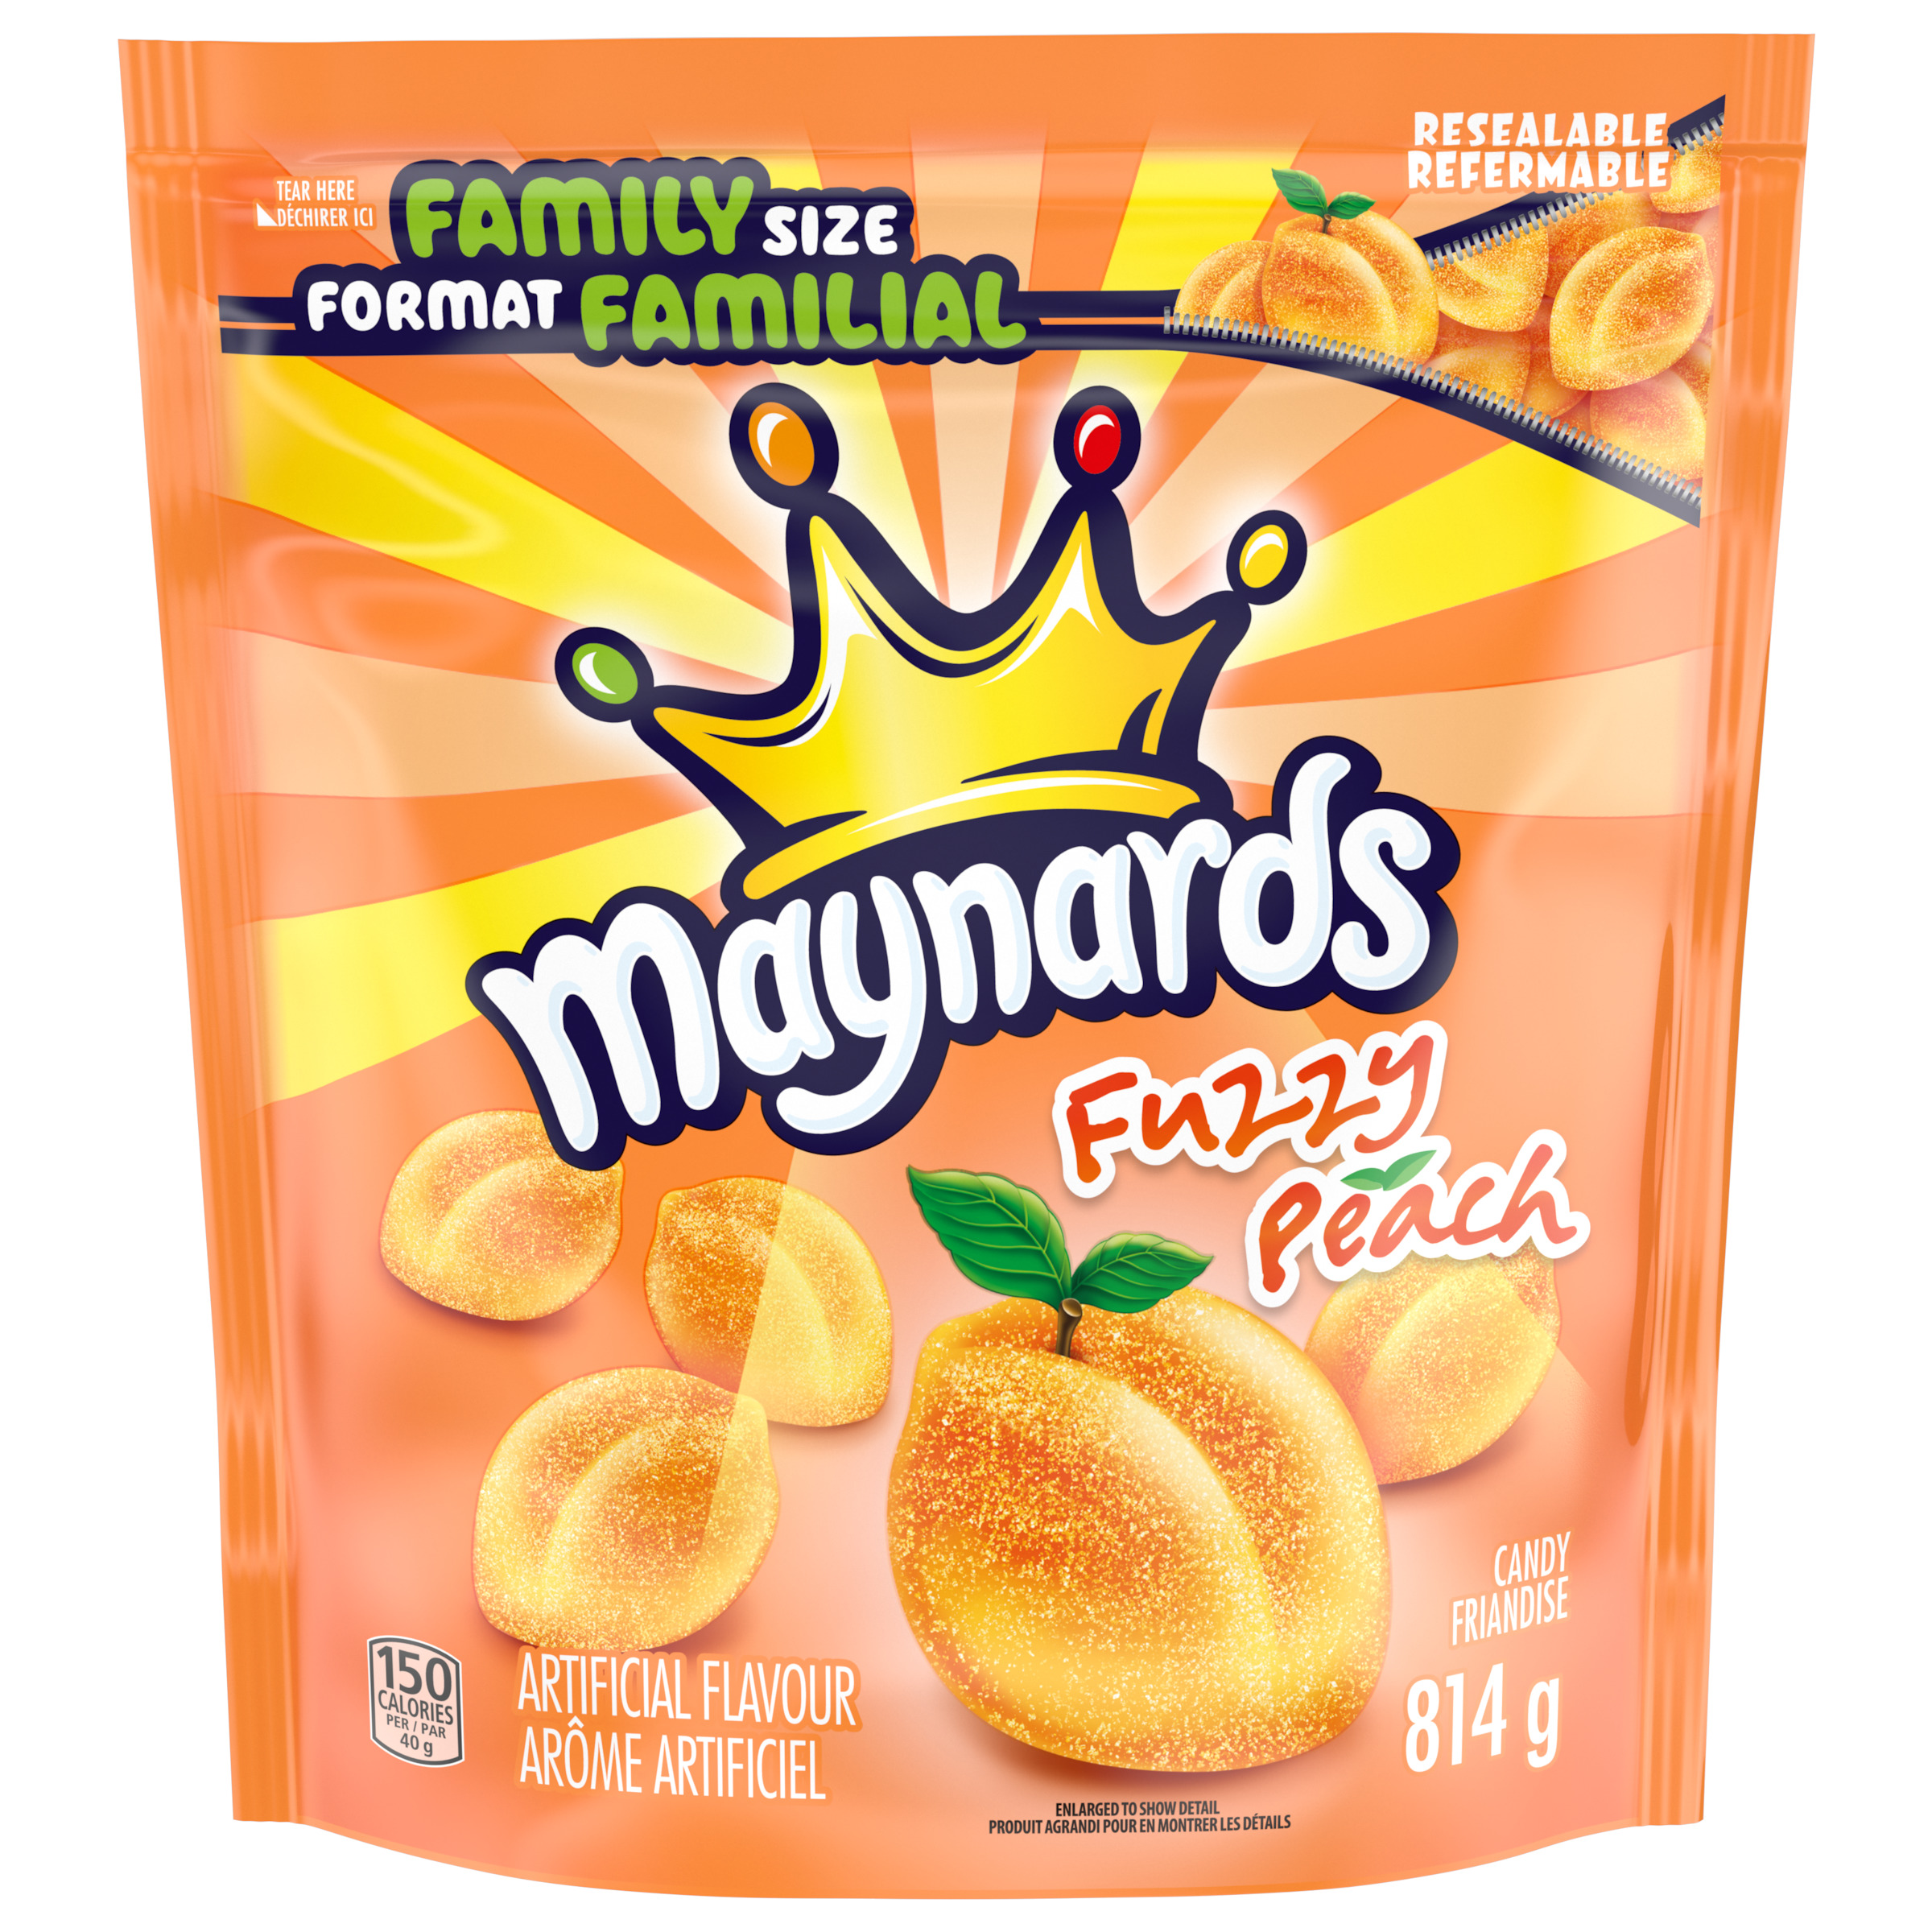 Maynards Party Size Fuzzy Peach Candy, 814G